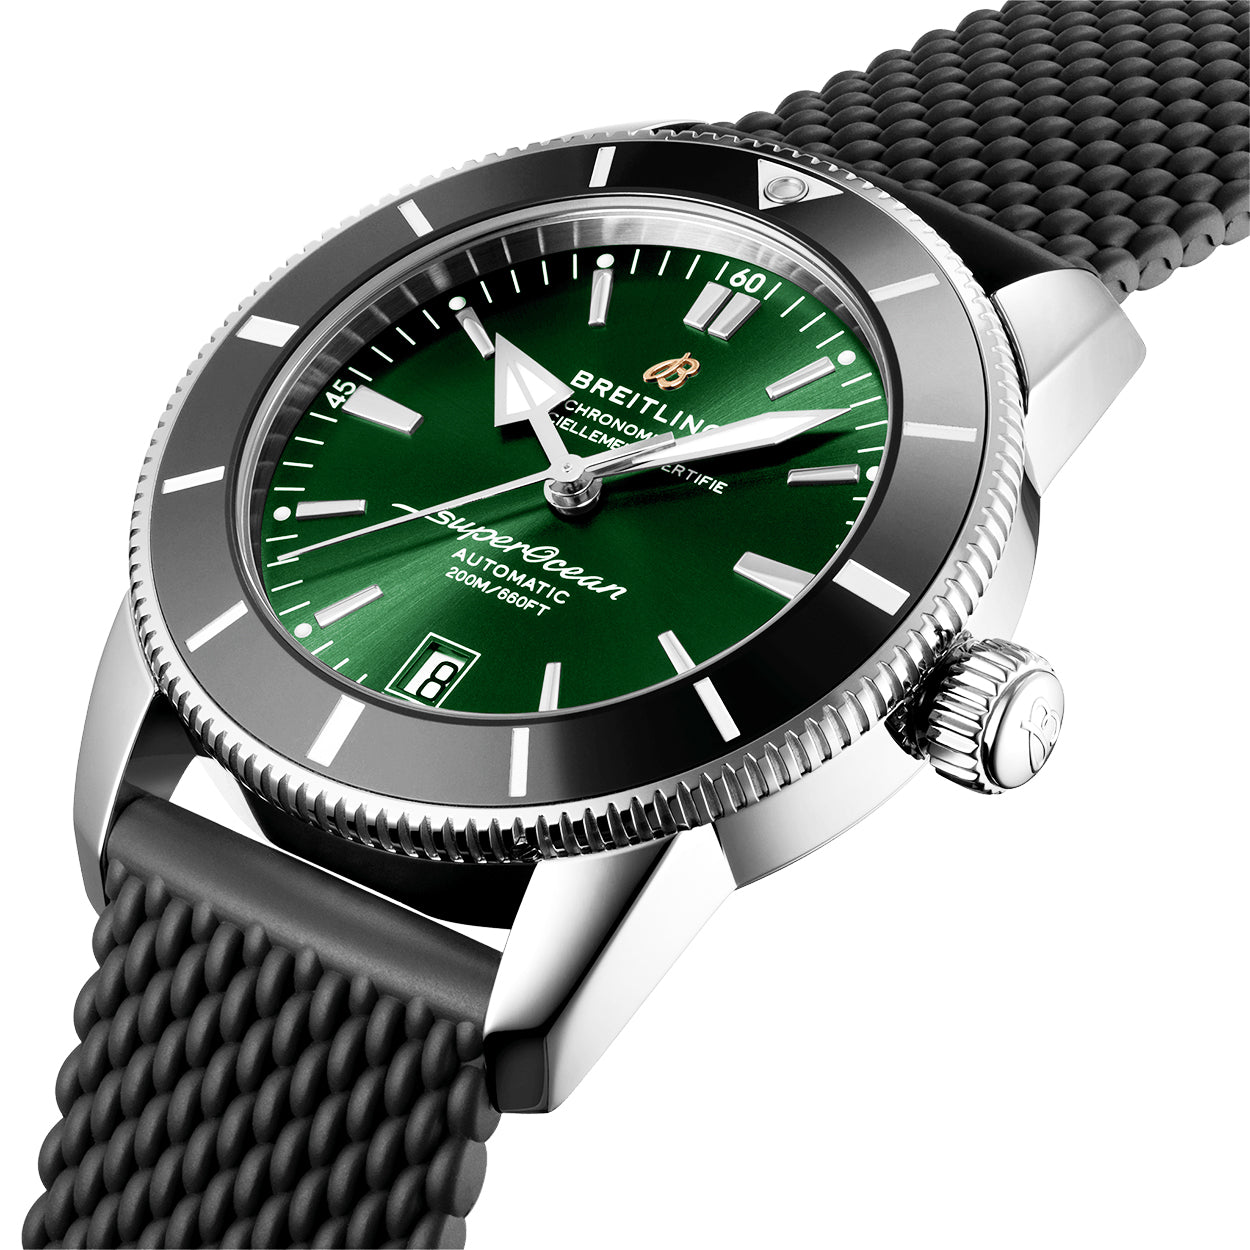 Superocean Heritage II 42mm Green Dial & Bezel Rubber Strap Watch